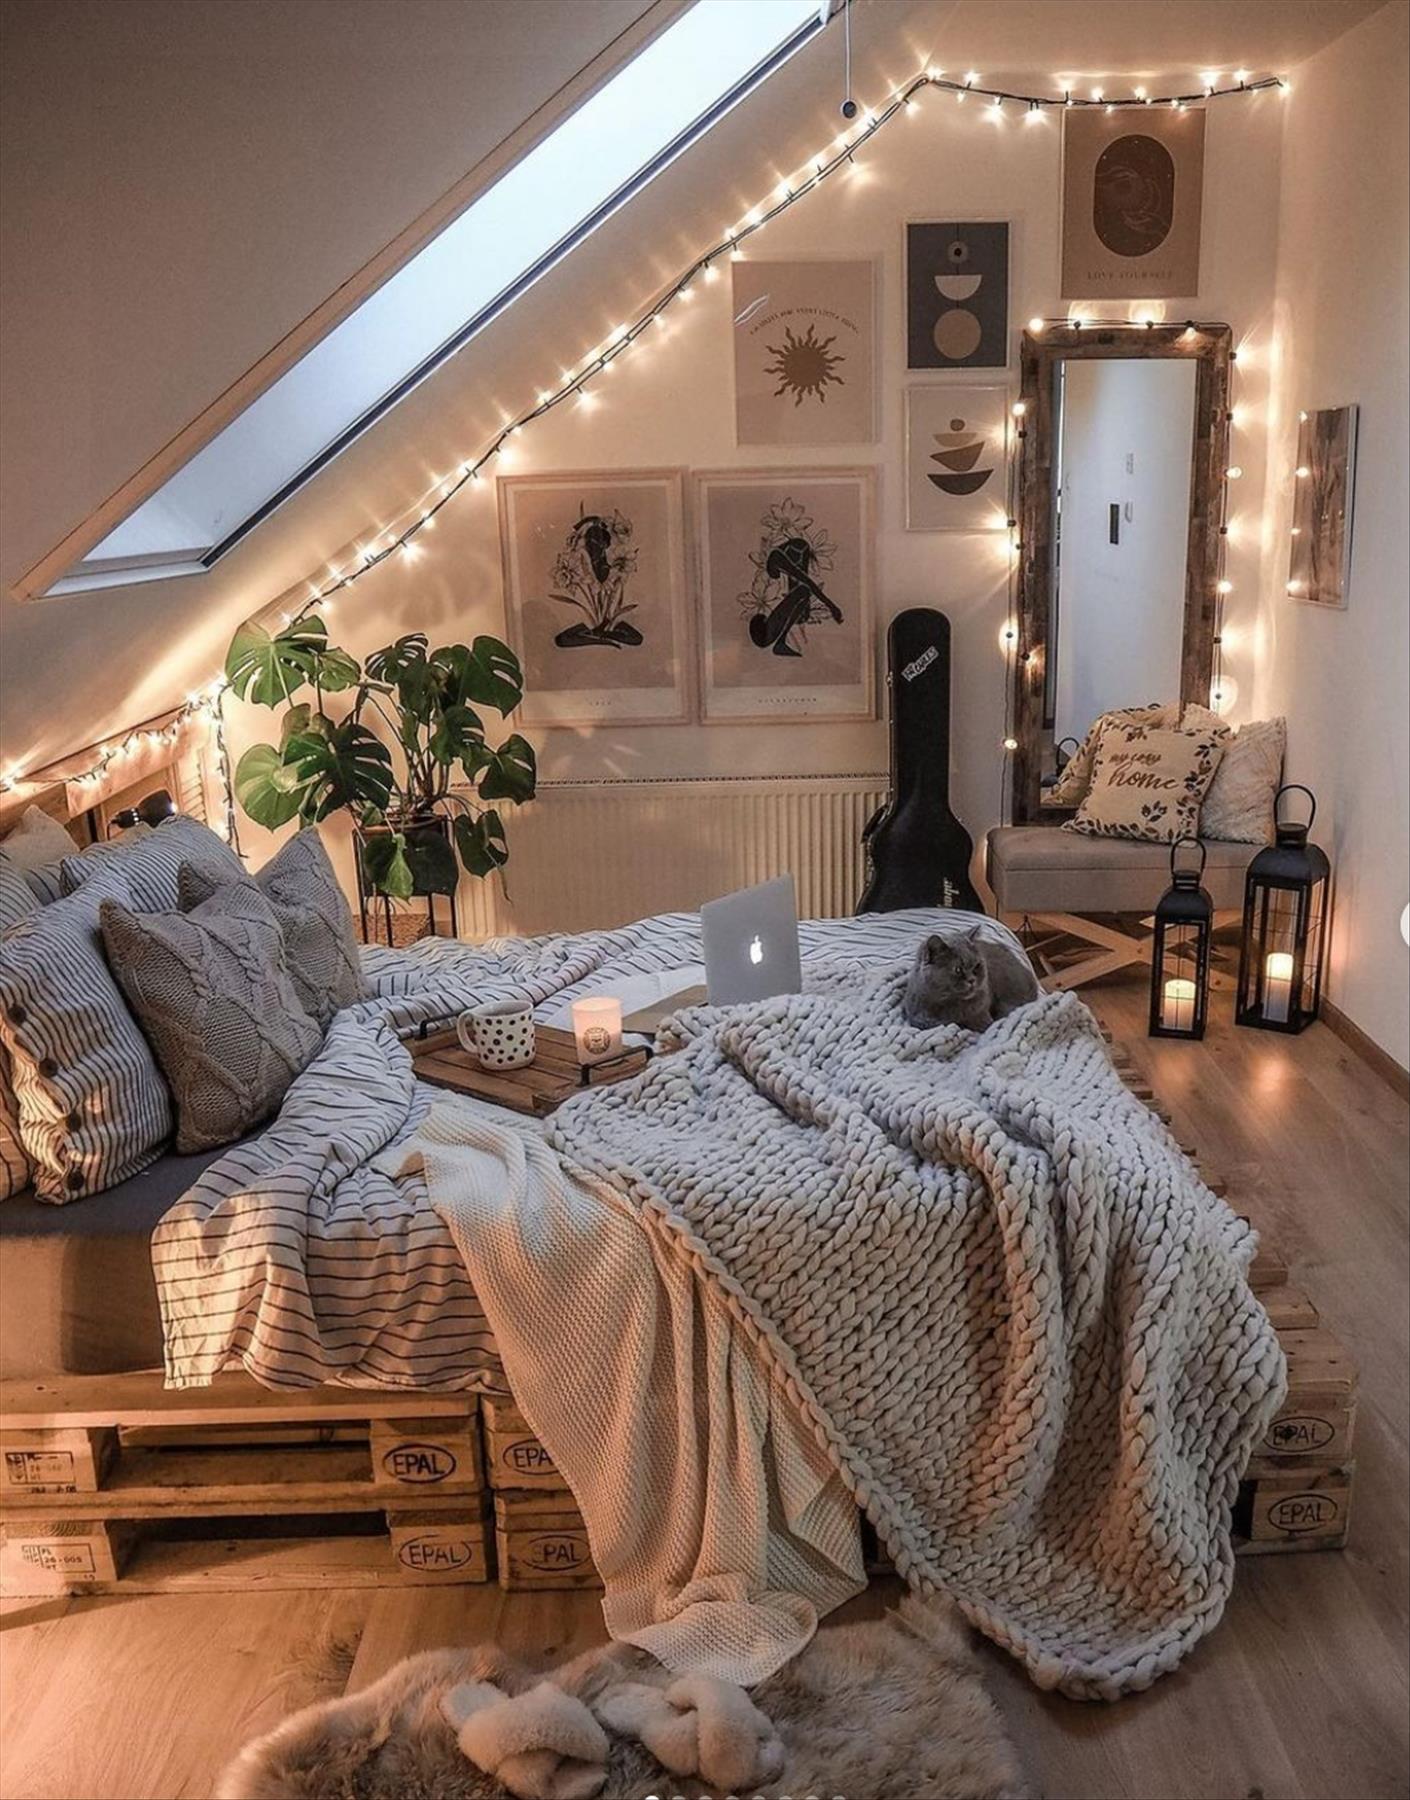 Cozy Summer bedroom decoration ideas to arrange now